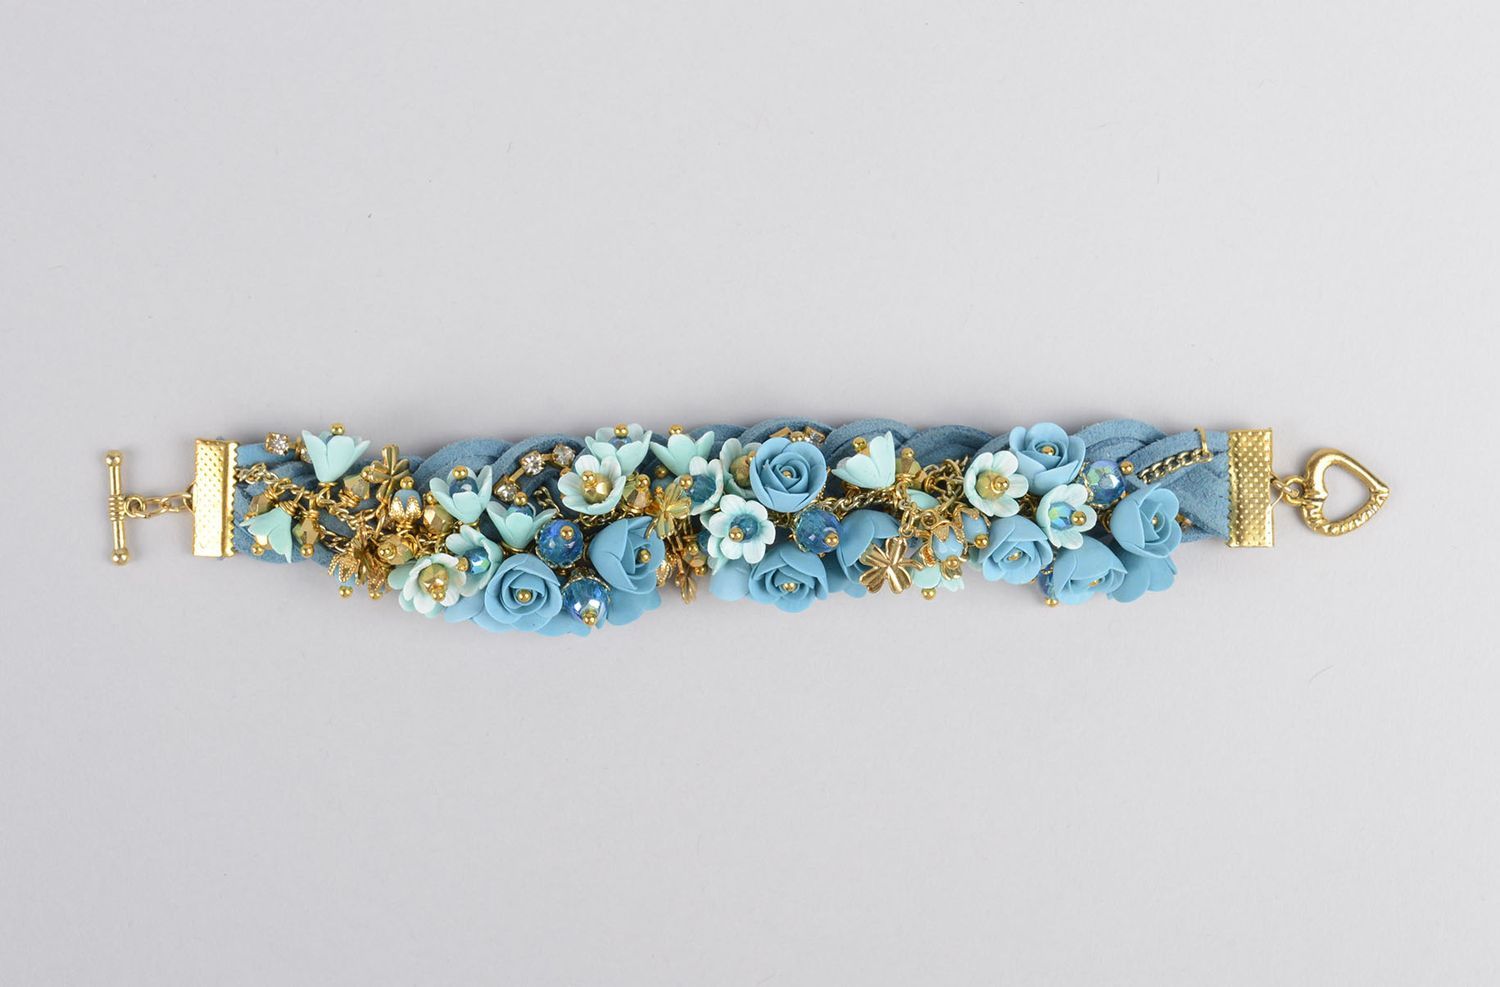 Handmade bracelet unusual bracelet designer accessory gift ideas clay jewelry photo 3